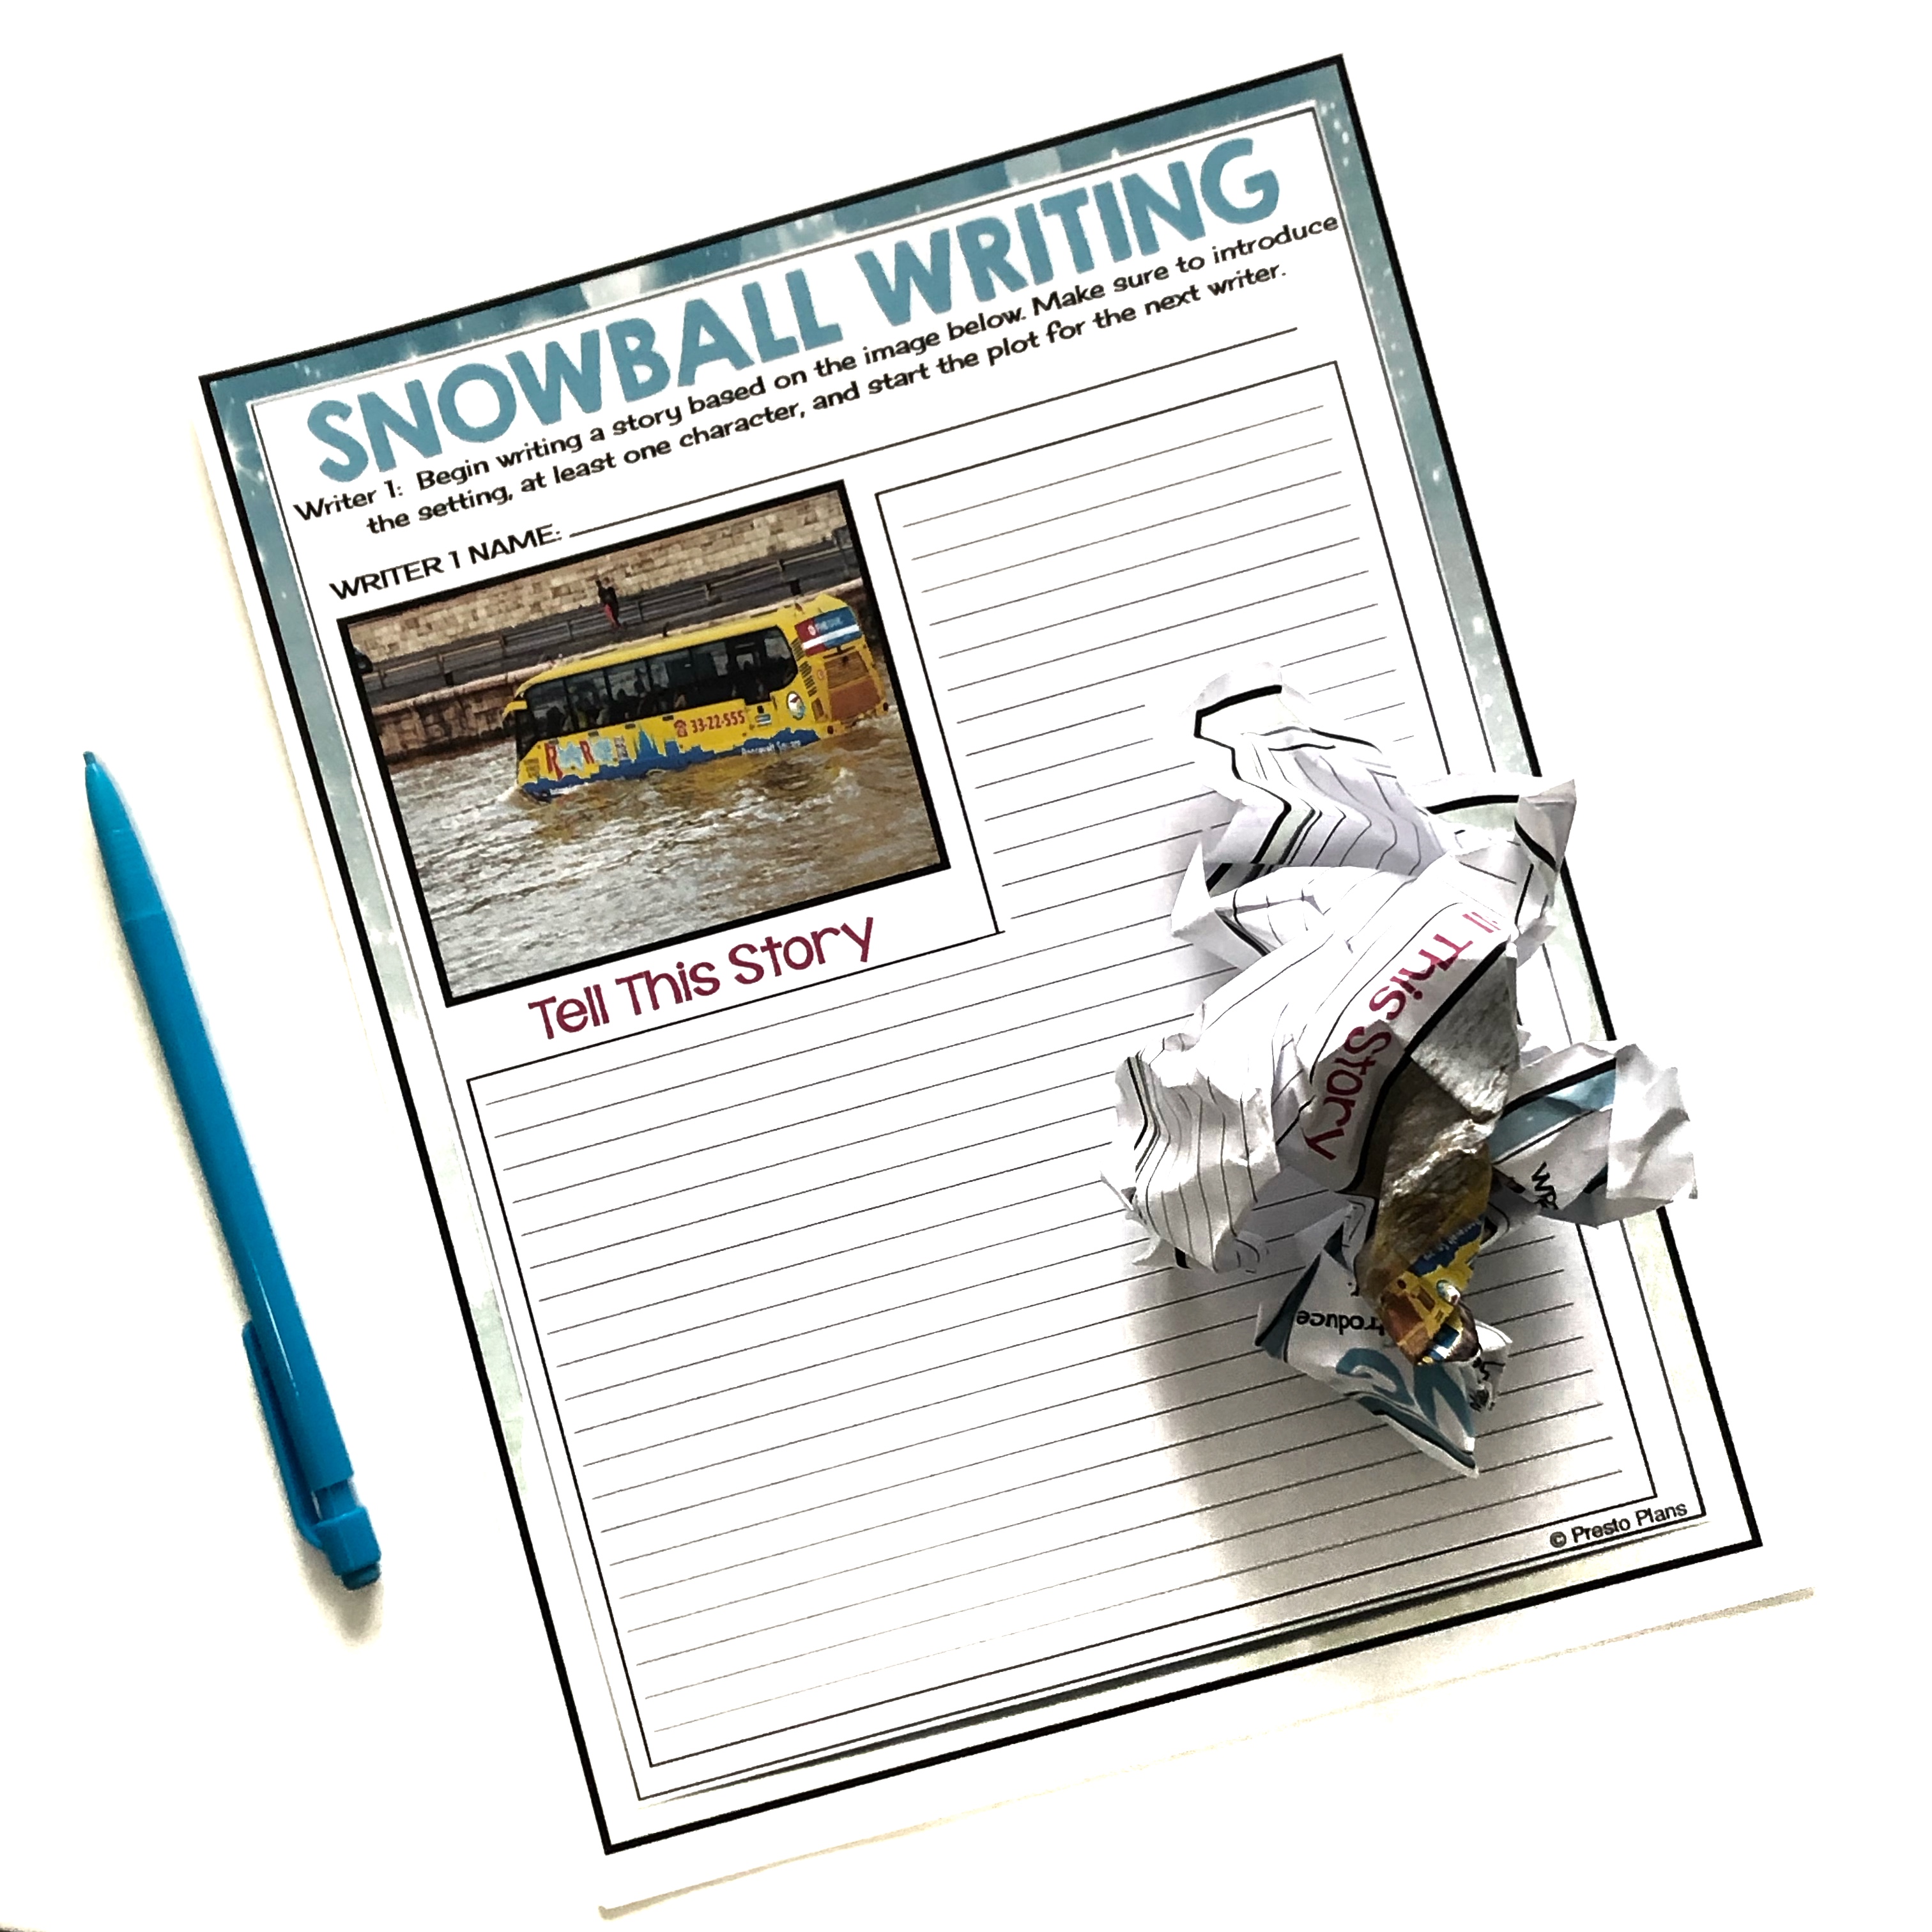 Snowball creative writing activity